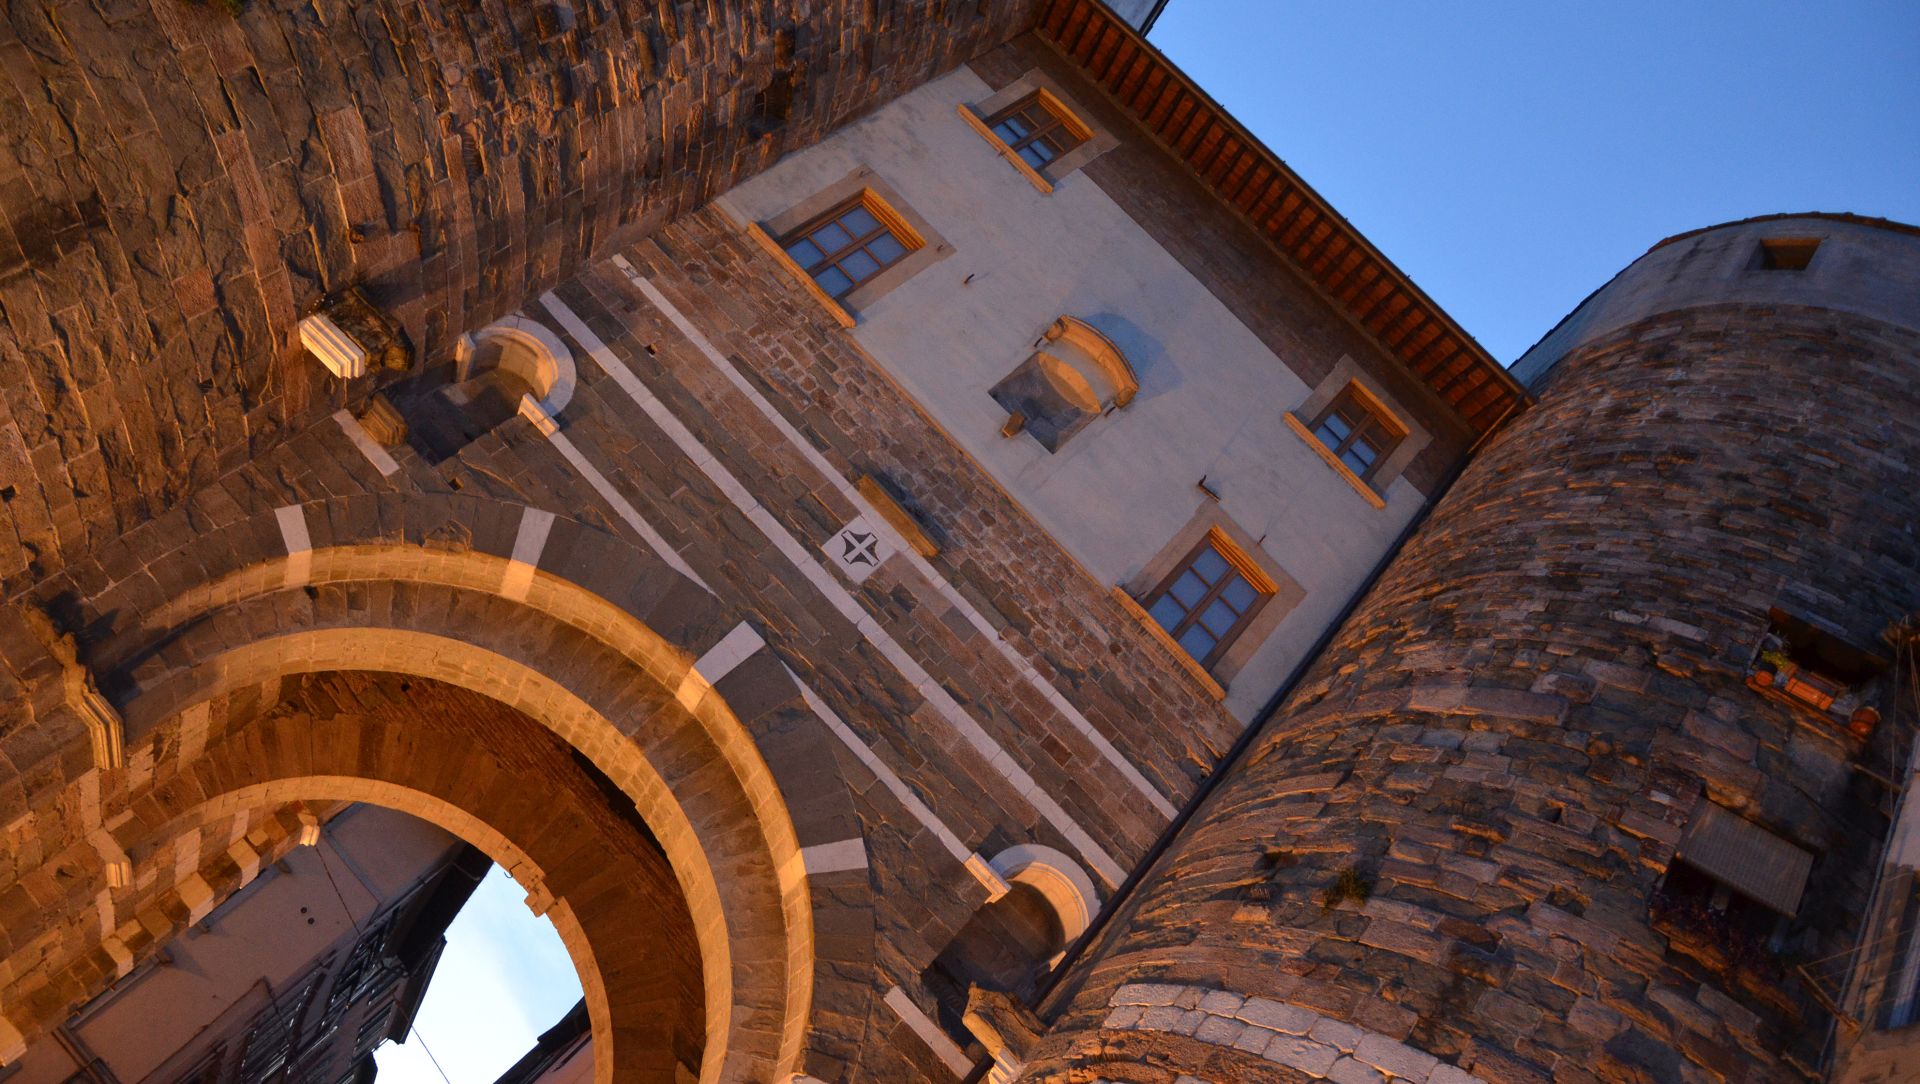 Porta San Gervasio des murailles médiévales de Lucca